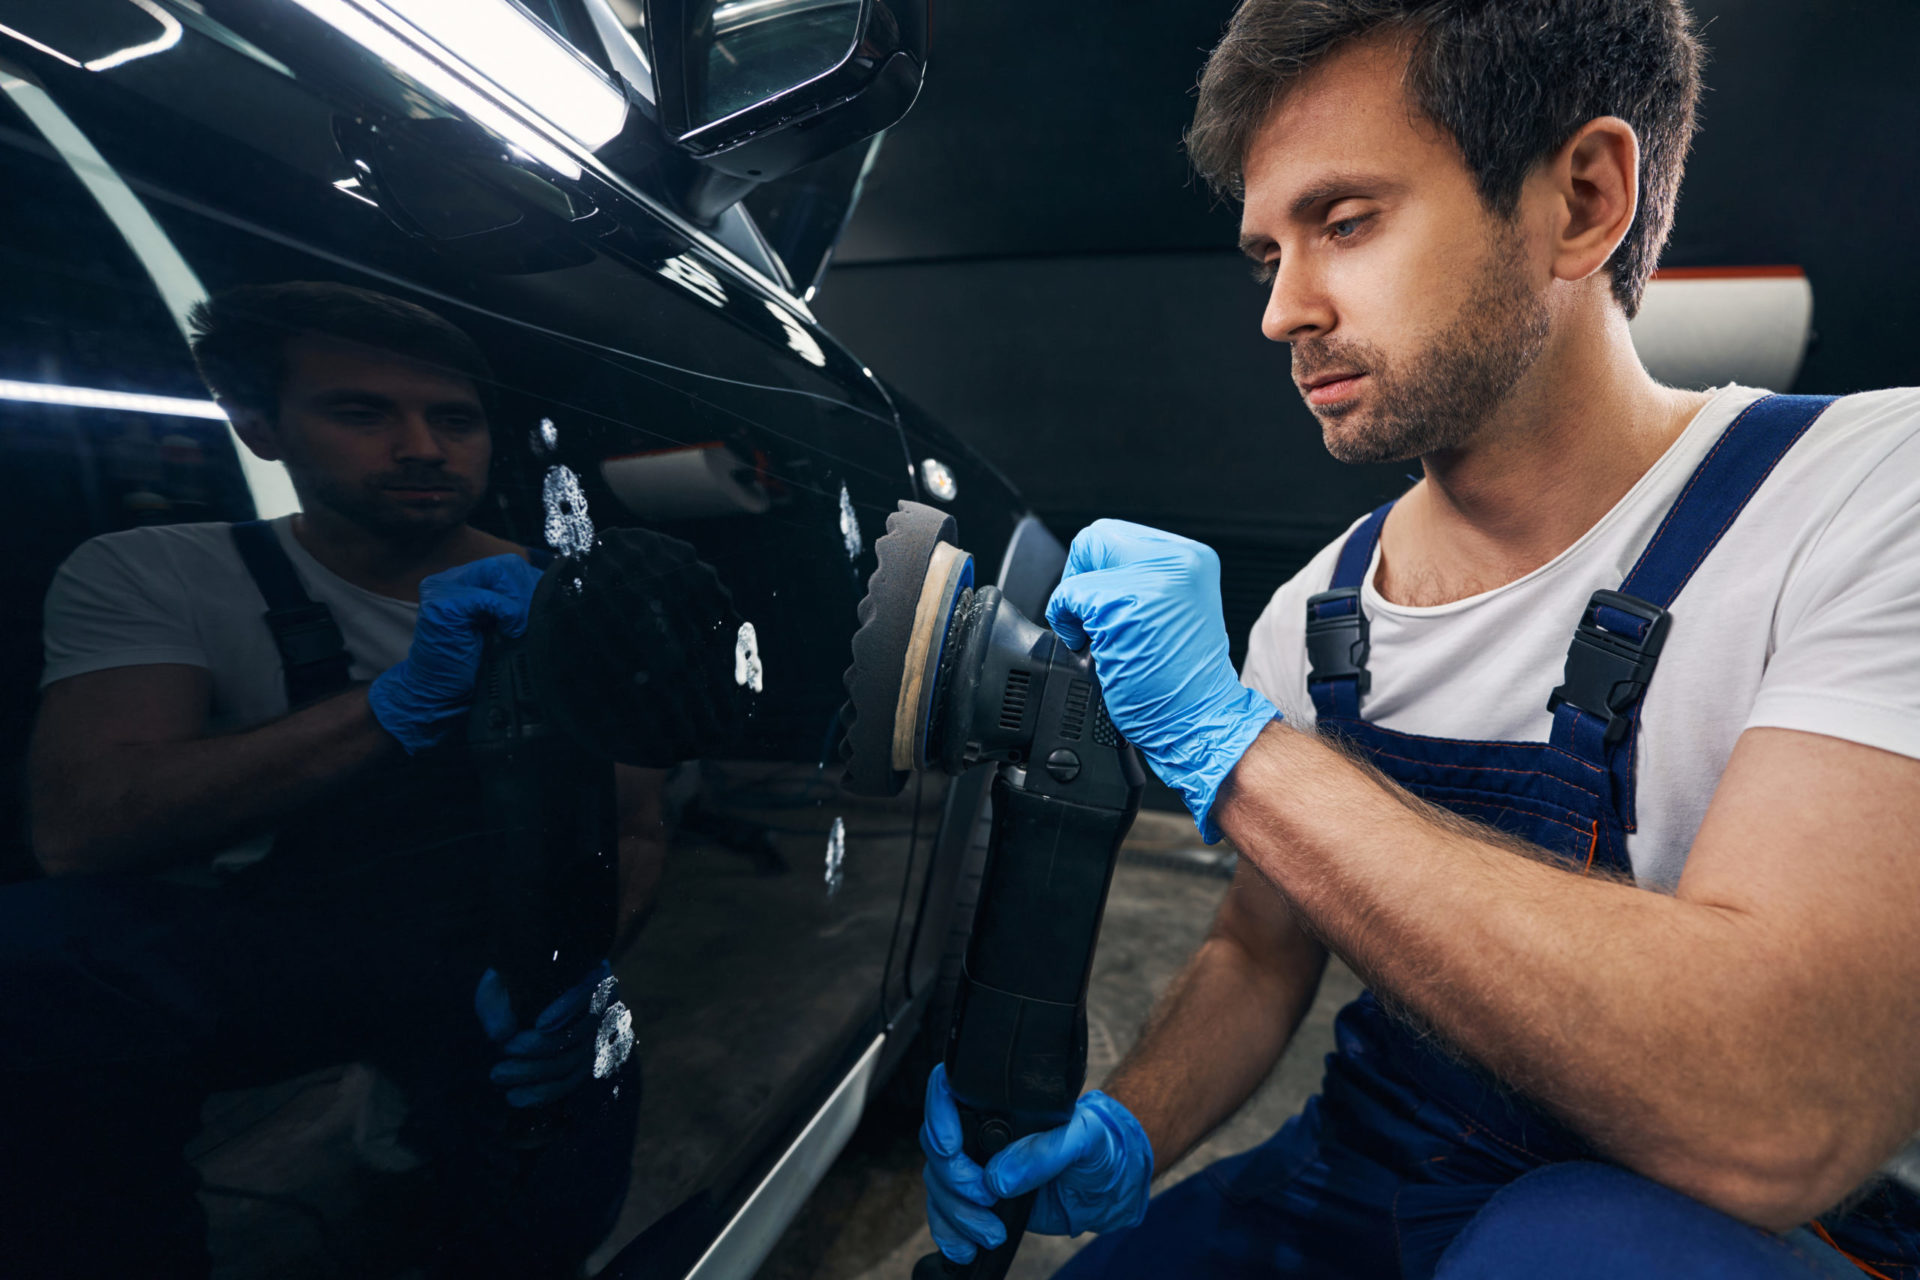 Caucasian repairman polishing body of car in automotive service